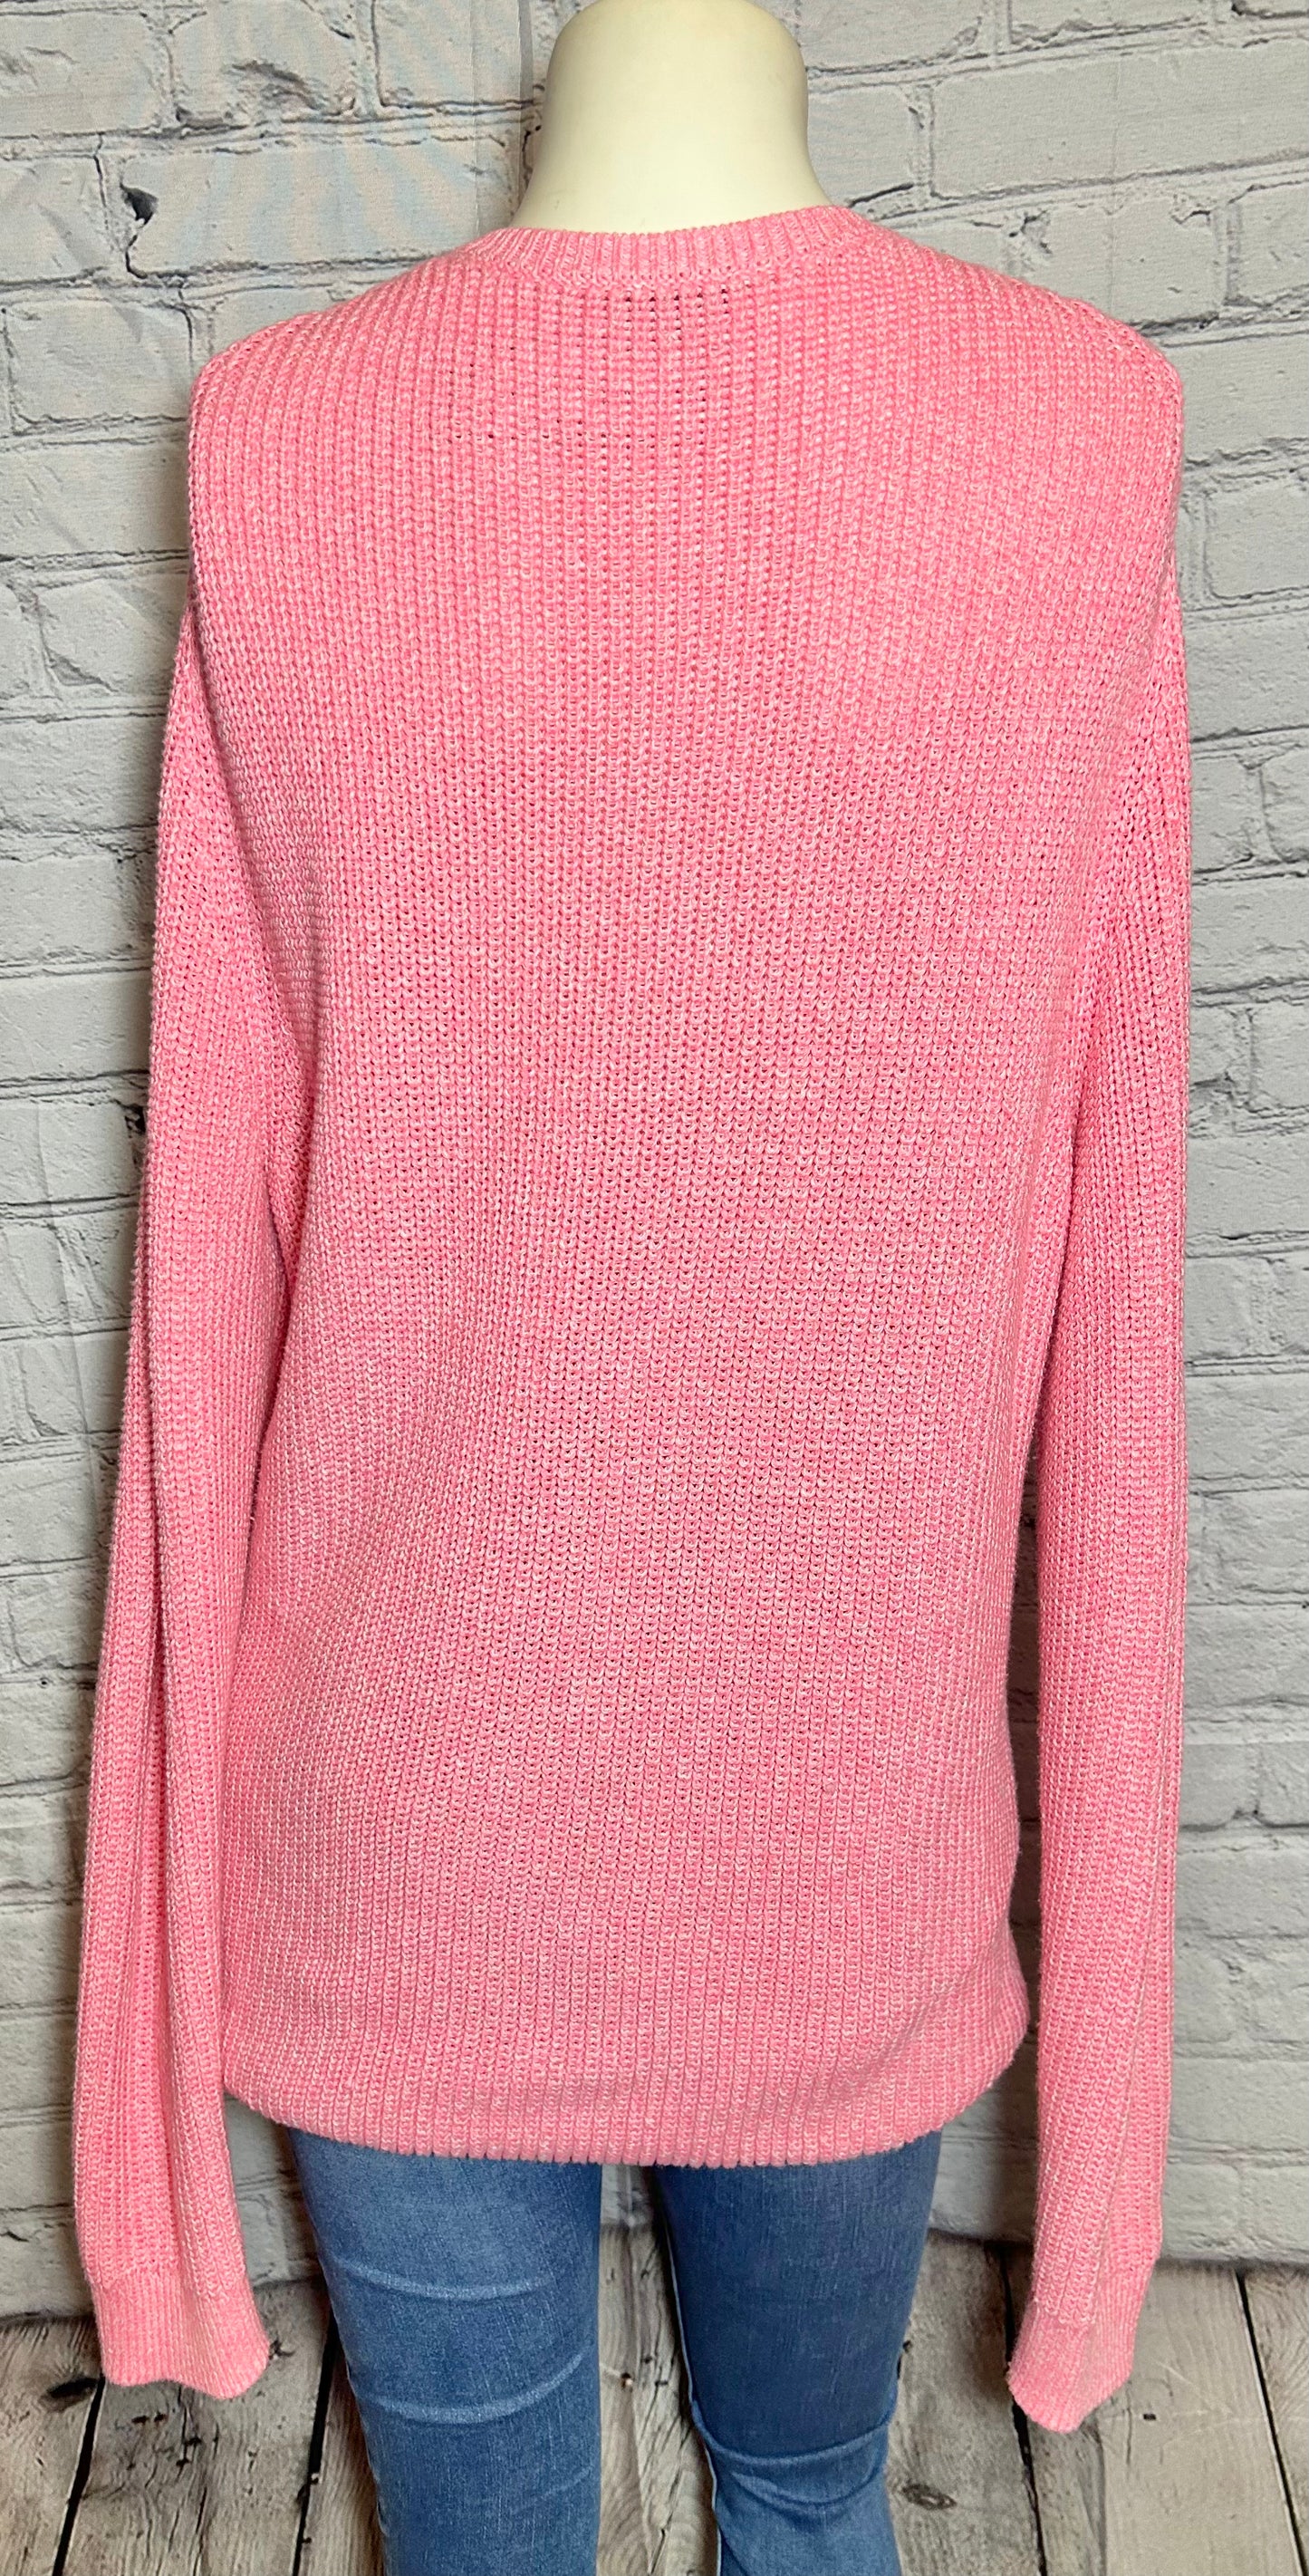 Talbots sweater